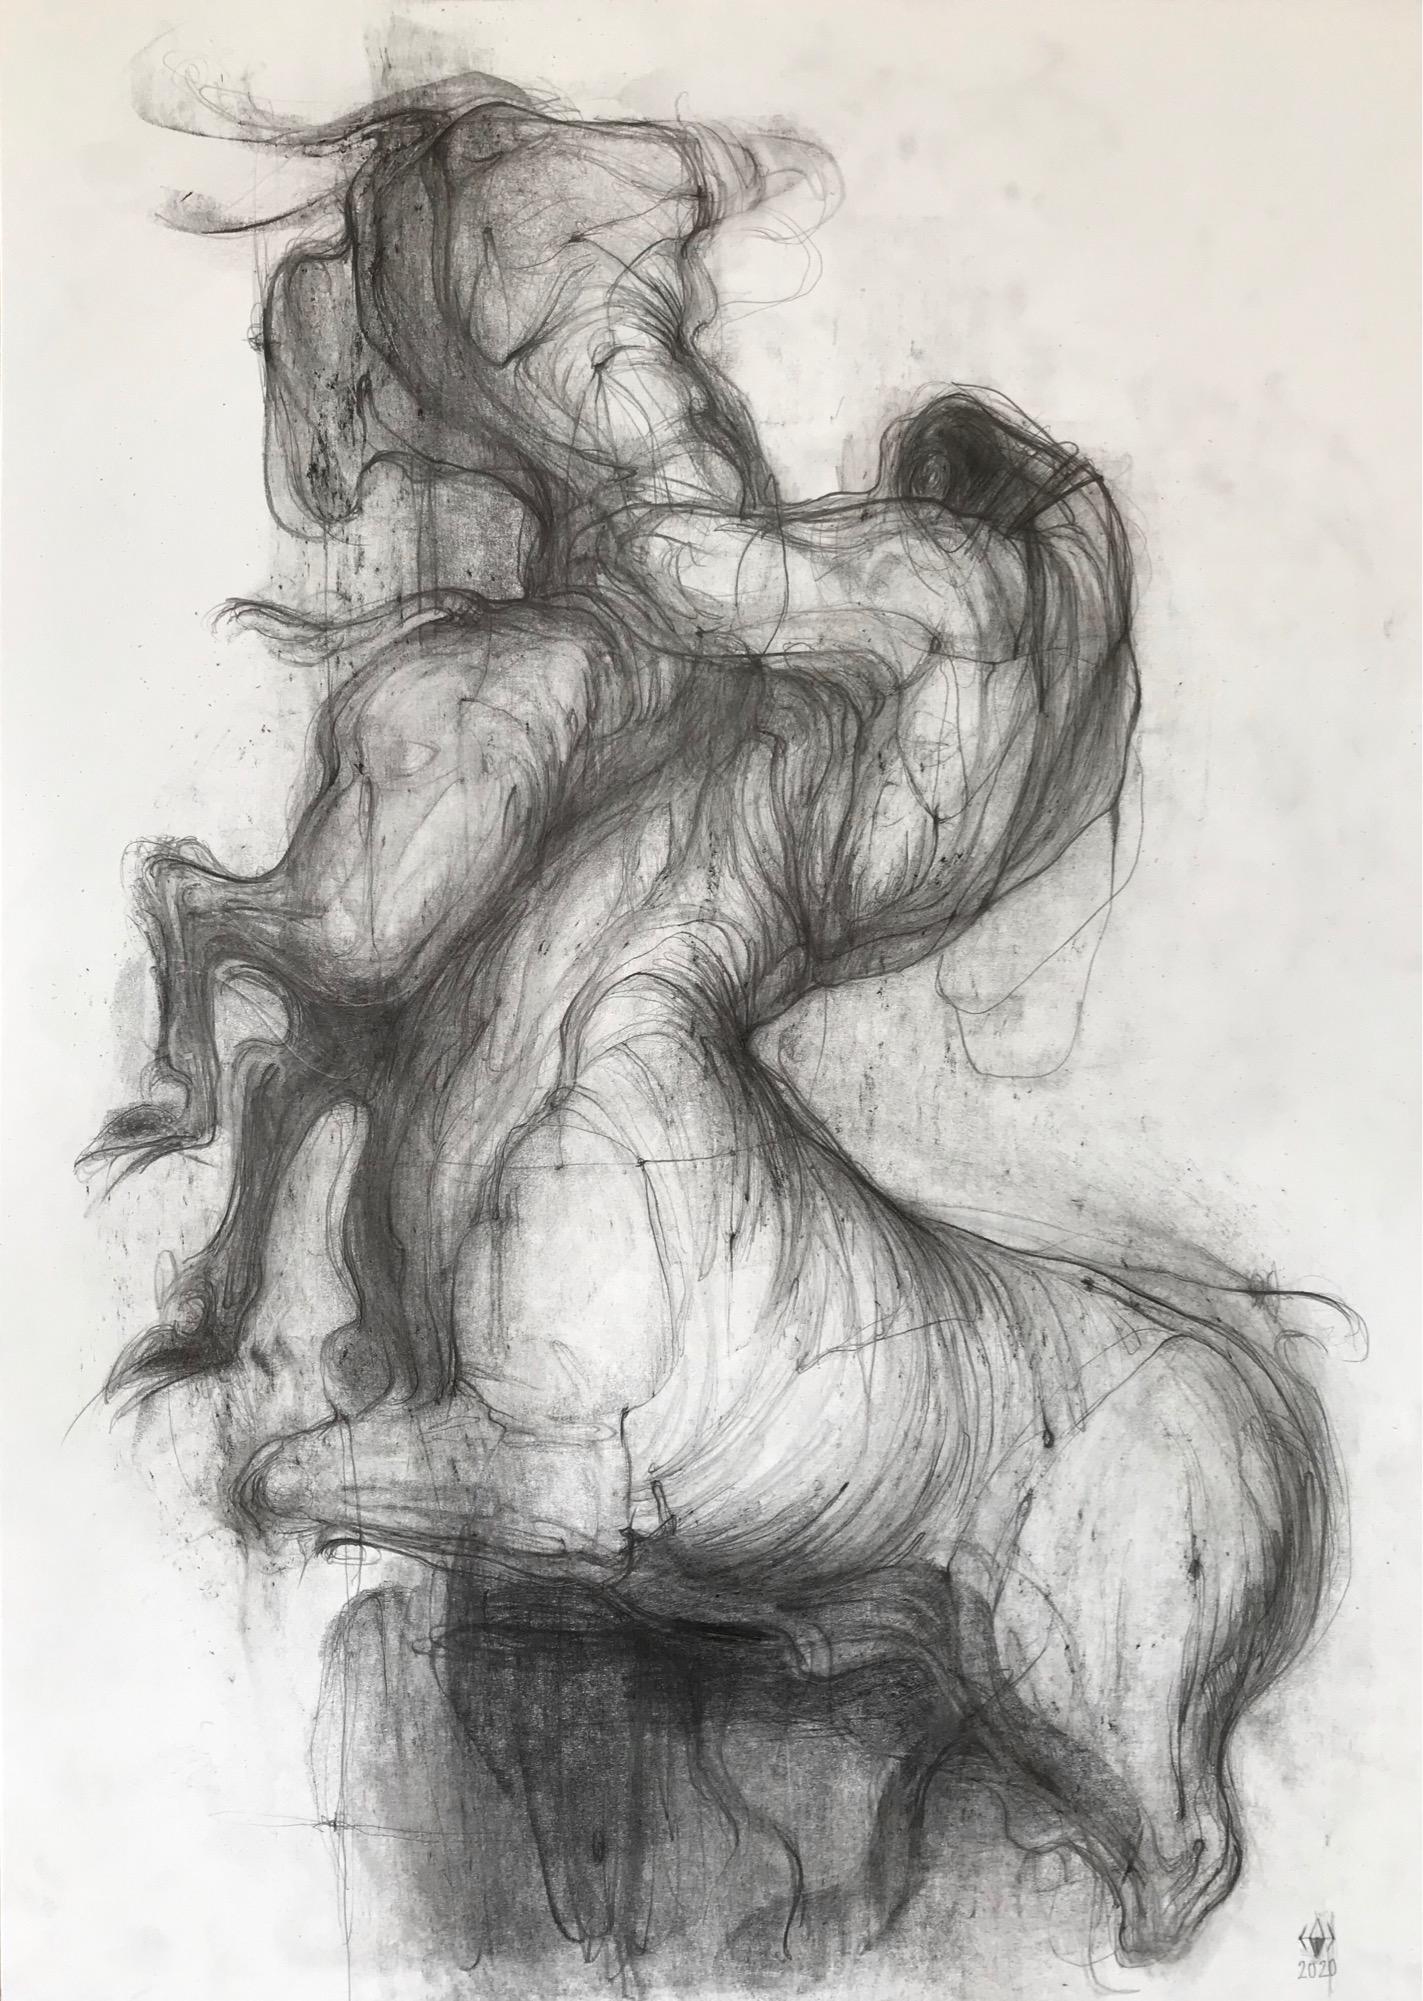 Dimitrii Drugakov Nude - Hot afternoon (minotaur, centaur) - expressive line drawing 